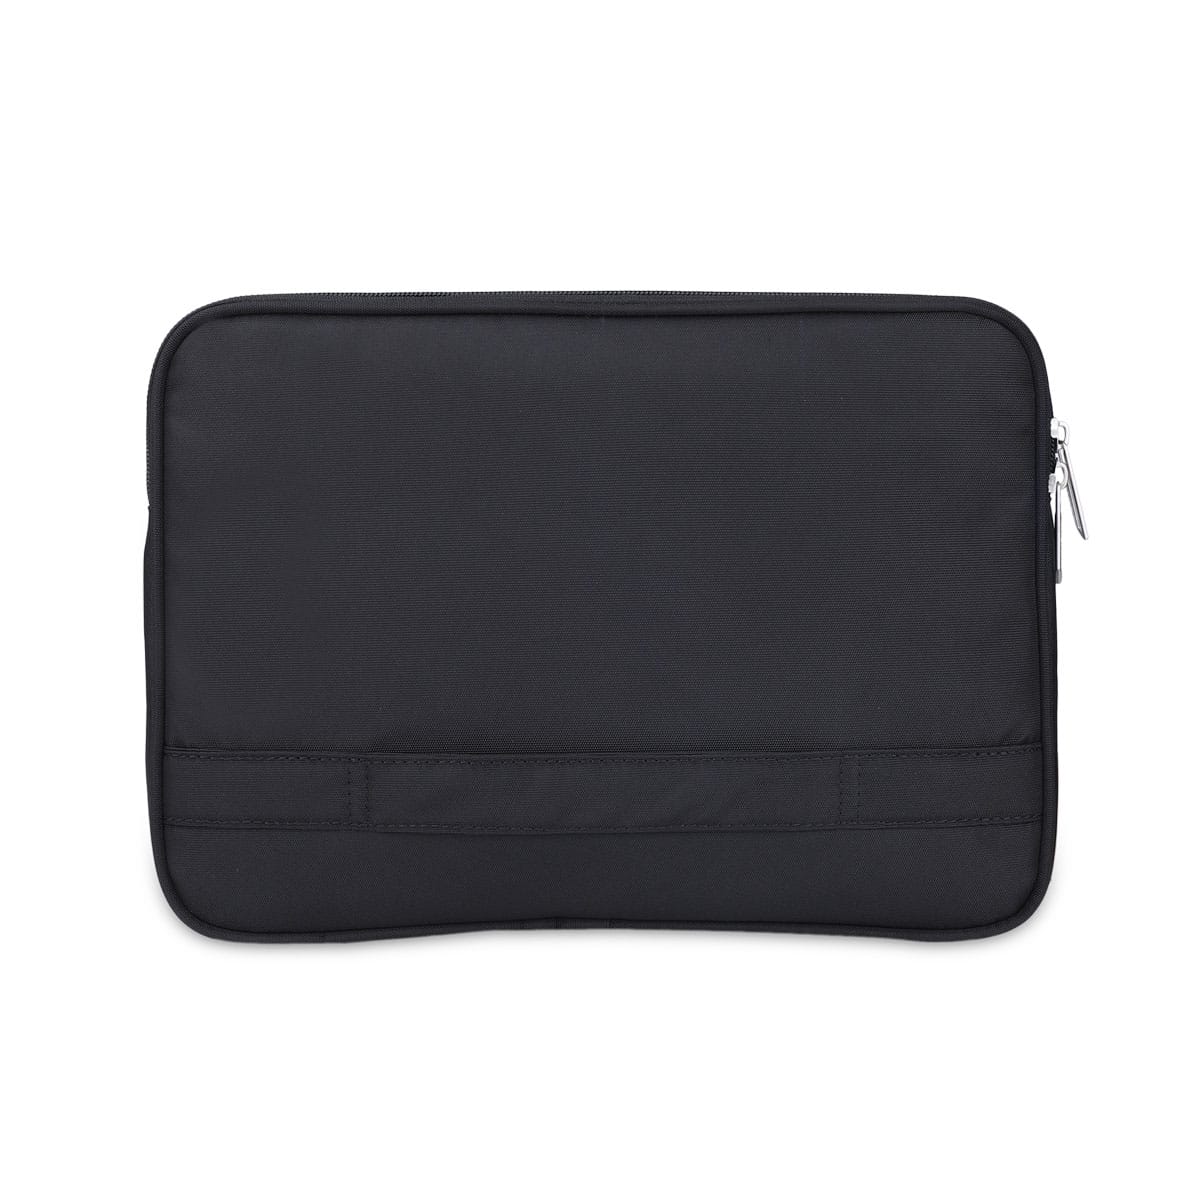 Black-Blue | Protecta Staunch Ally MacBook Sleeve-3